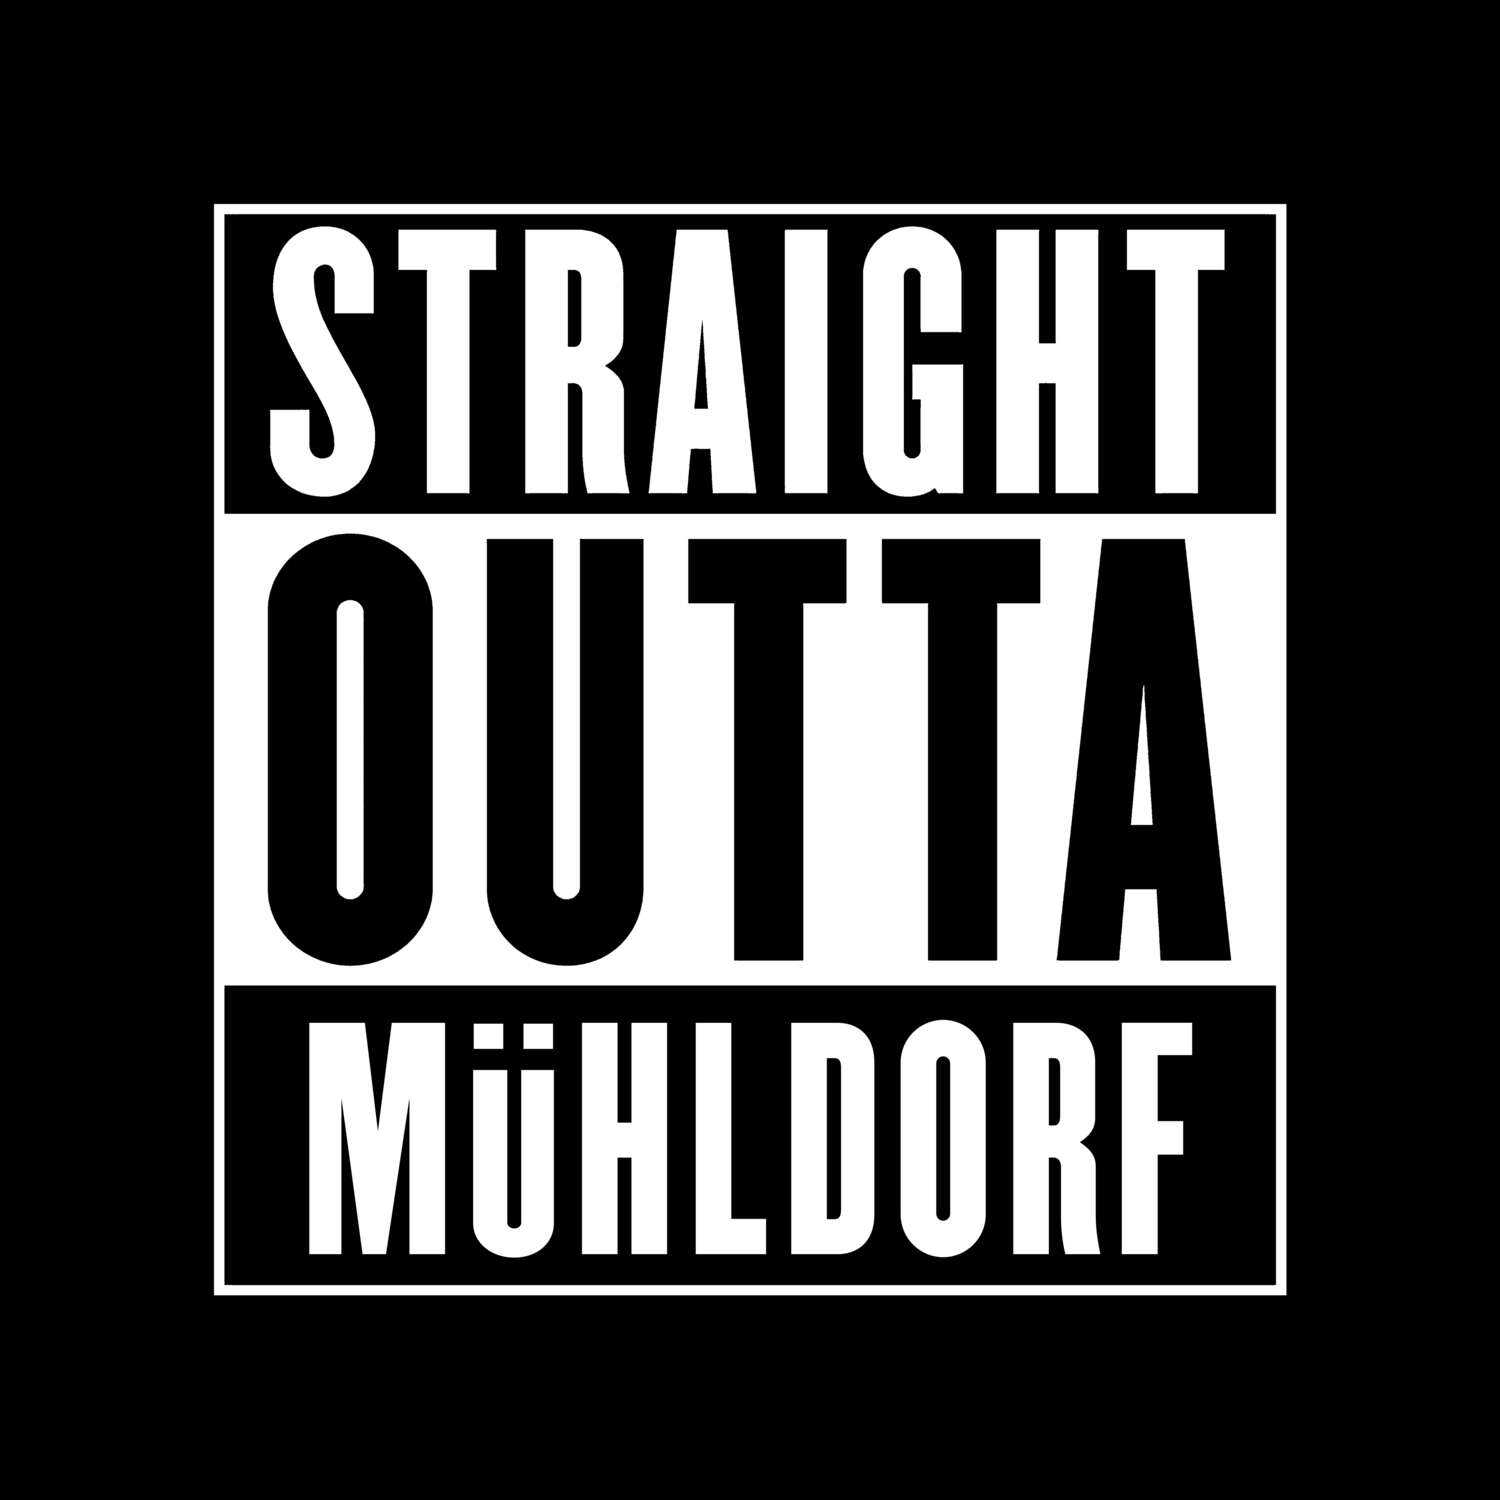 Mühldorf T-Shirt »Straight Outta«